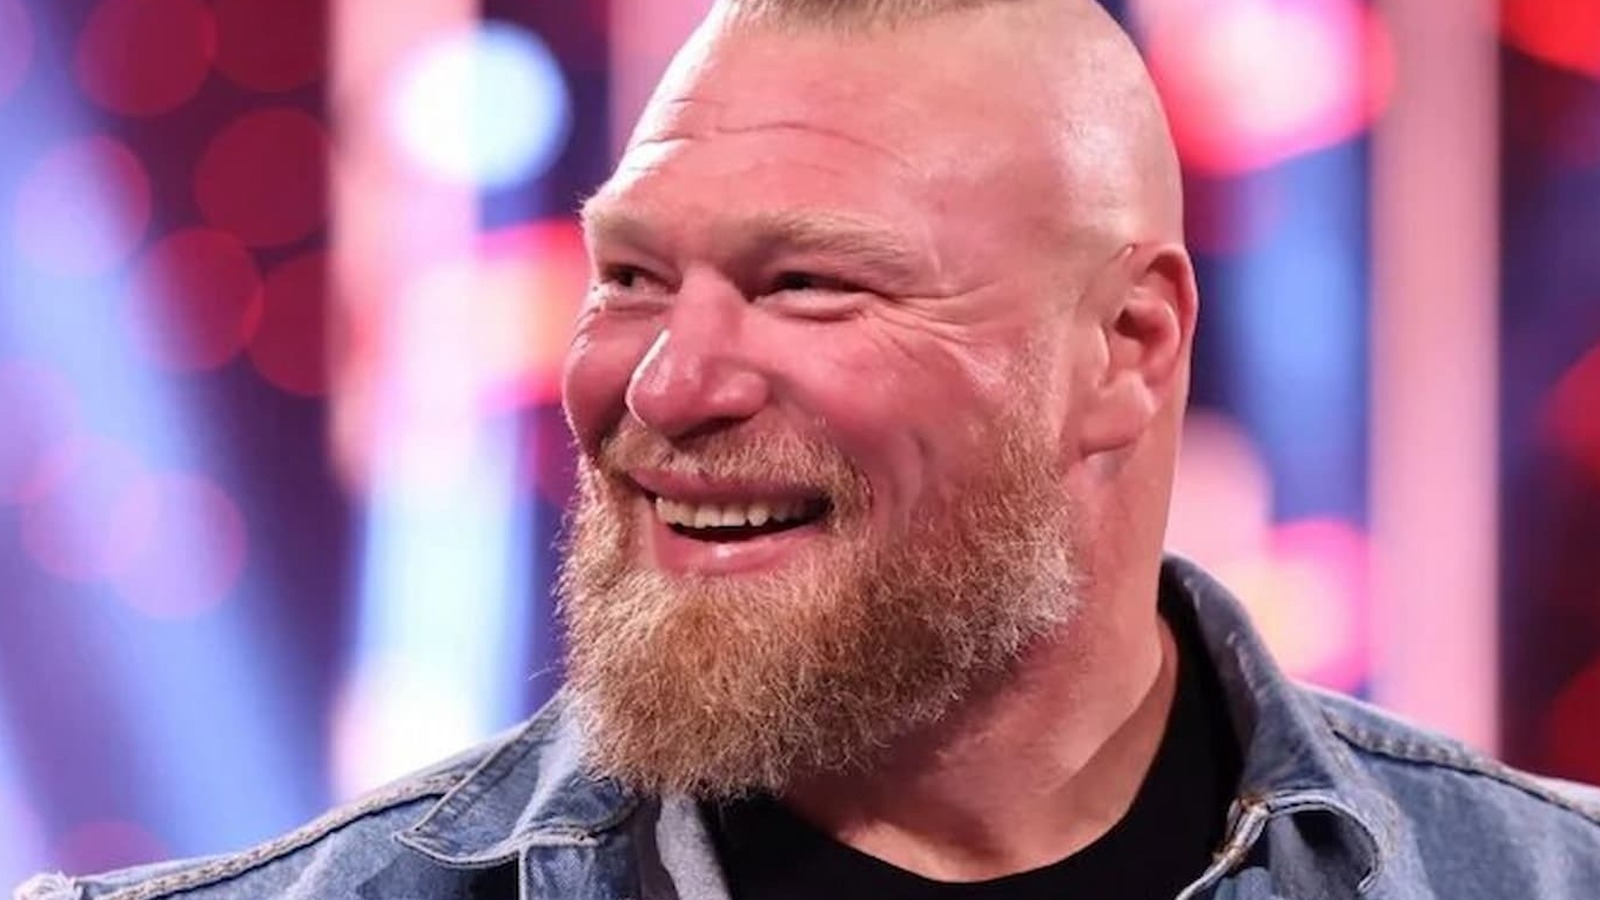 Posible motivación para el ataque de Brock Lesnar a Cody Rhodes ofrecido en WWE SmackDown